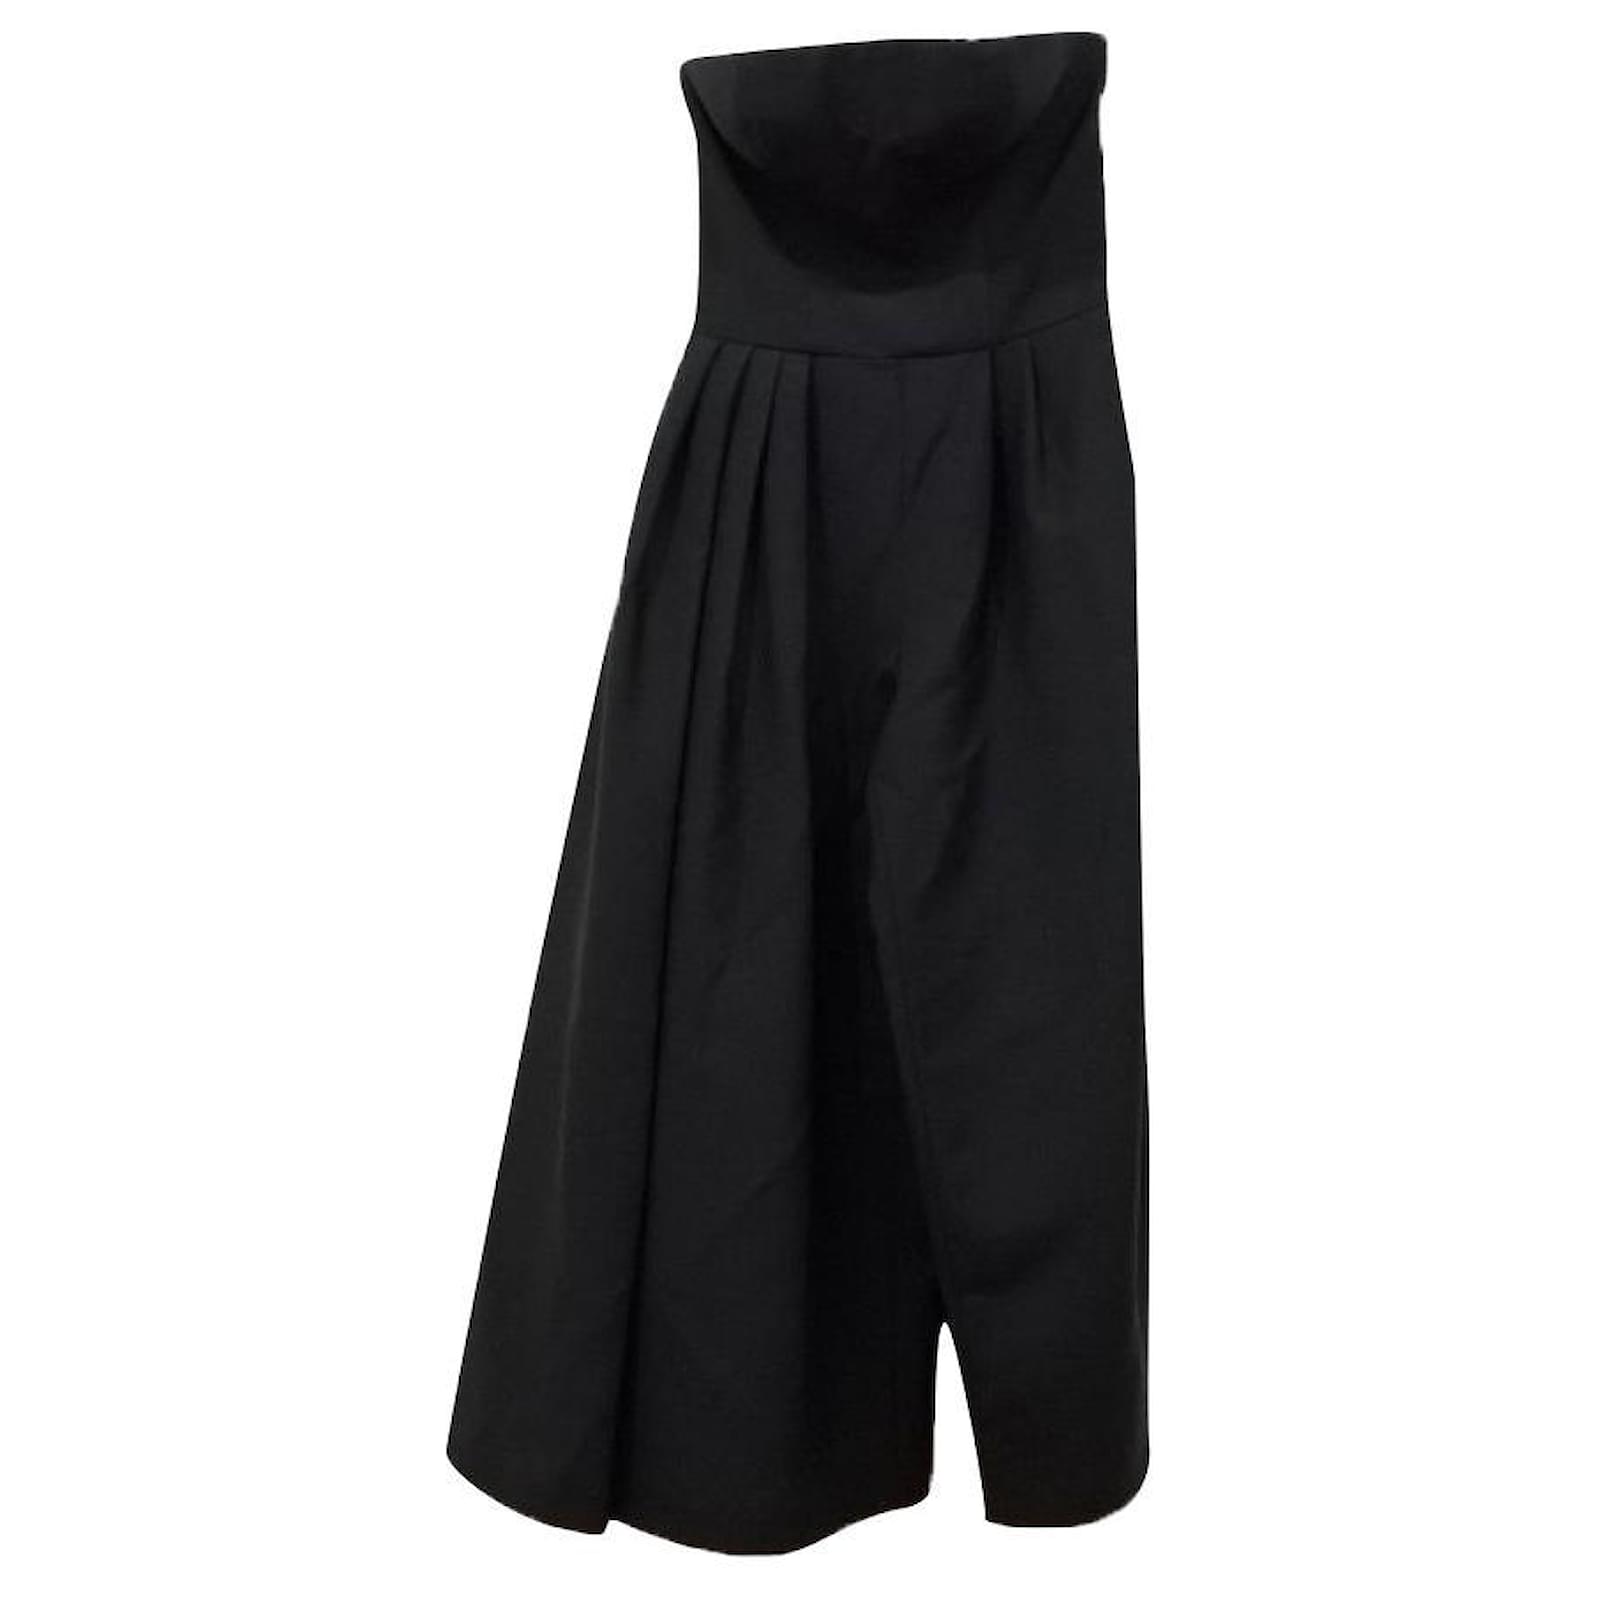 Christian Dior: All in one Bear Top Black Black Women's dress